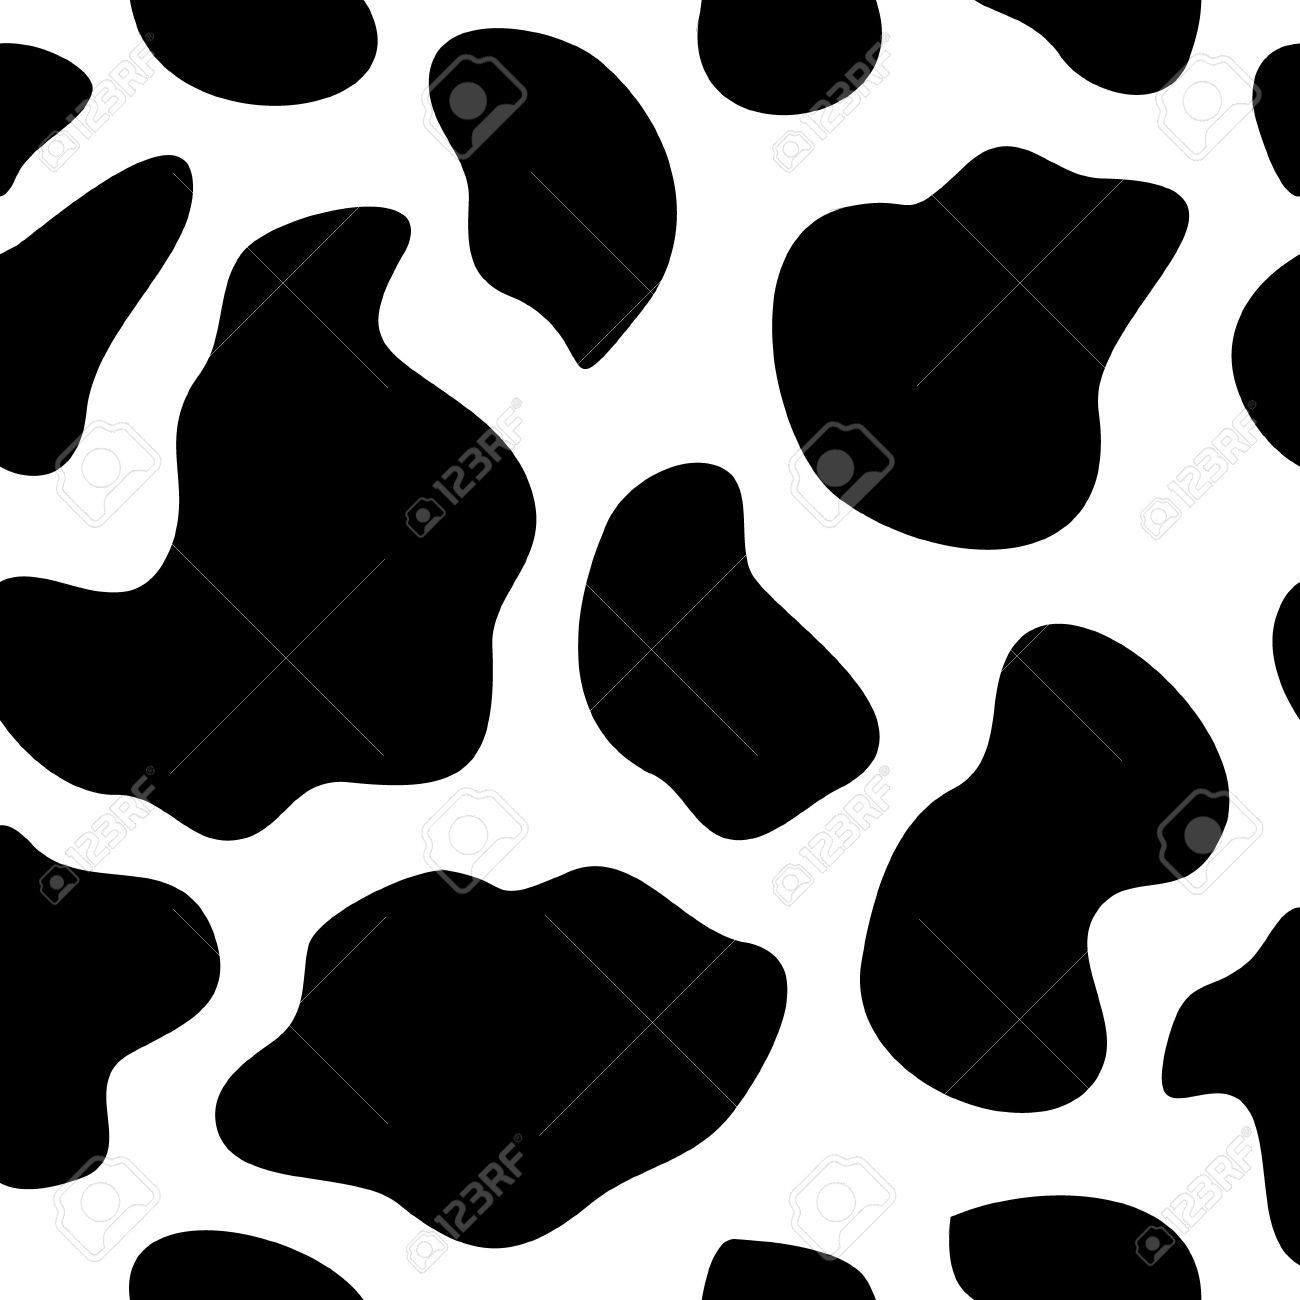 cow footprint clipart - photo #44